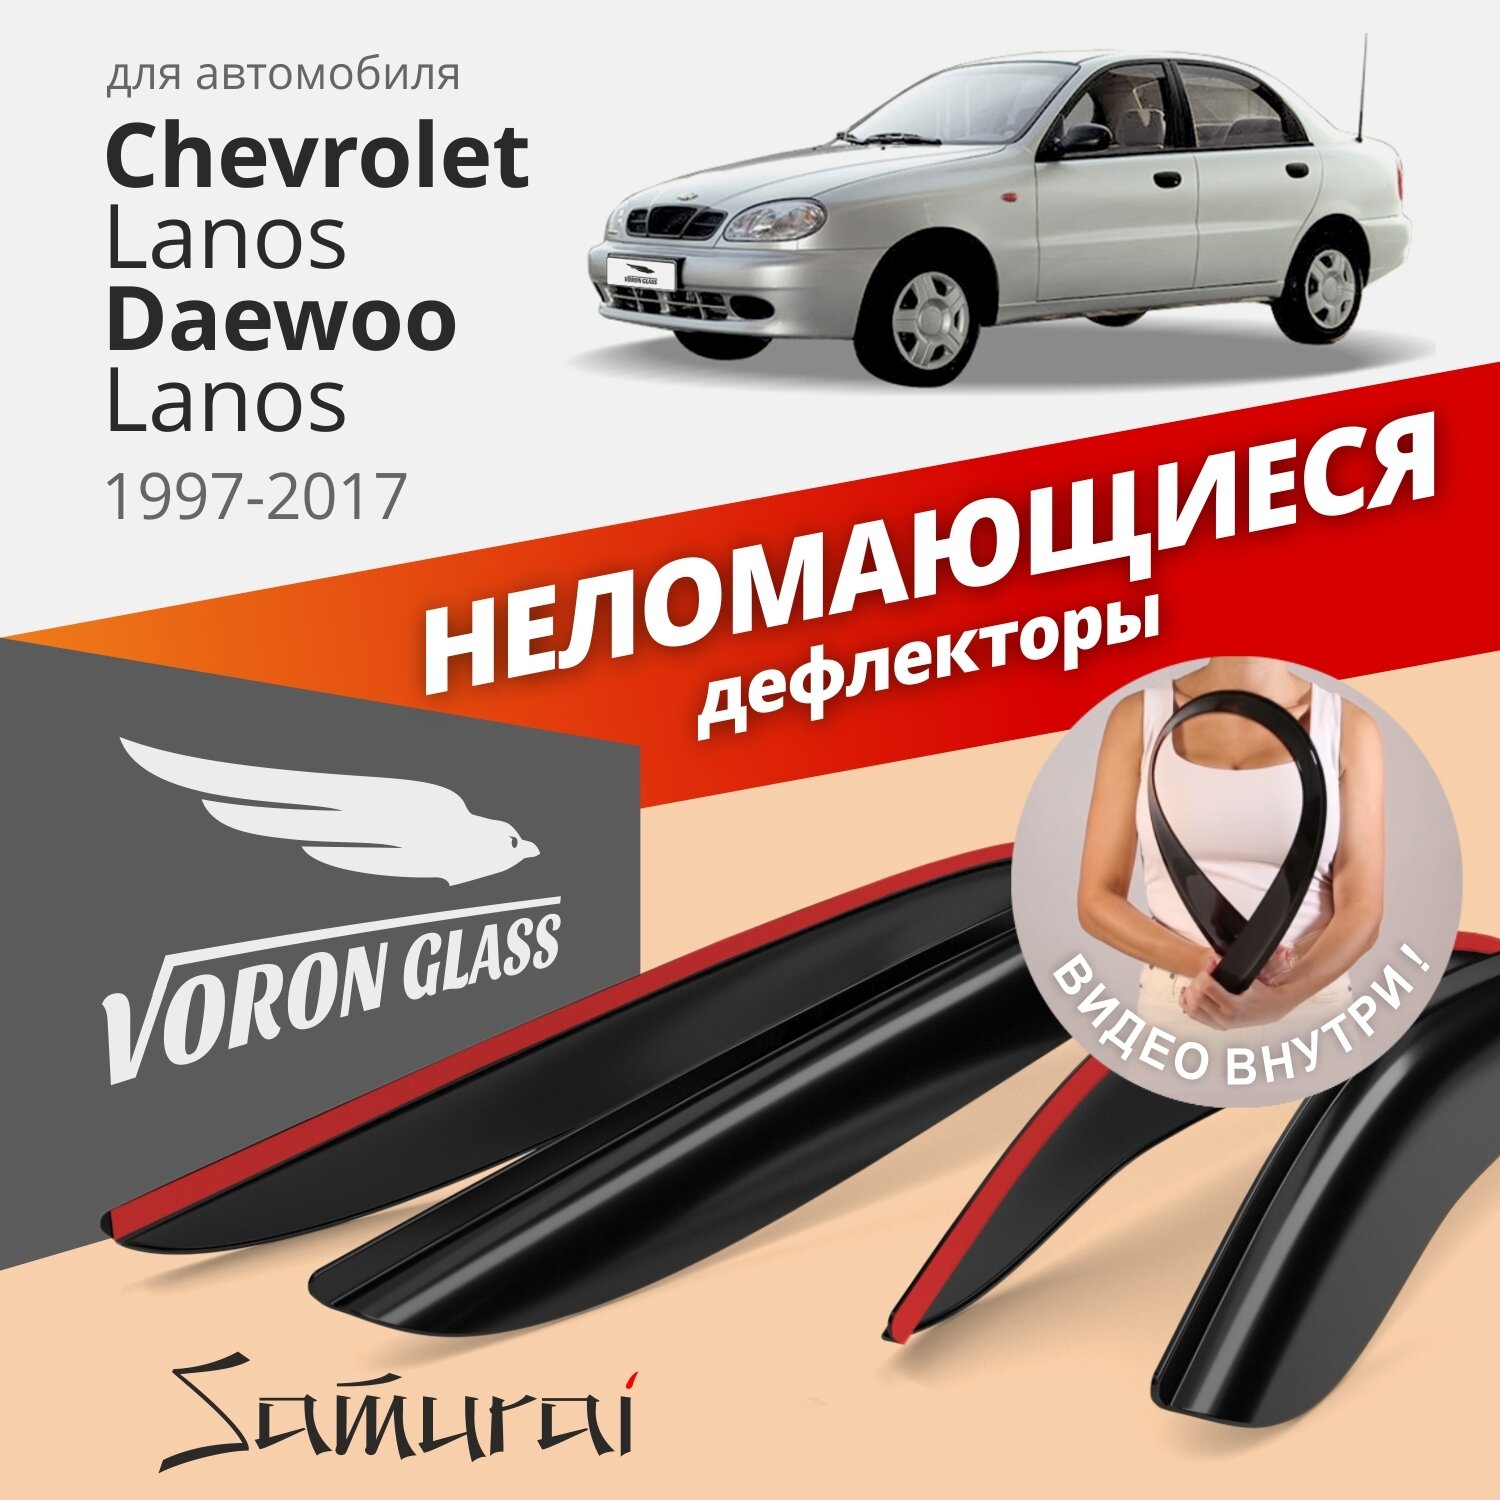 Дефлектор окон Voron Glass DEF00228 для Chevrolet Lanos Daewoo Lanos